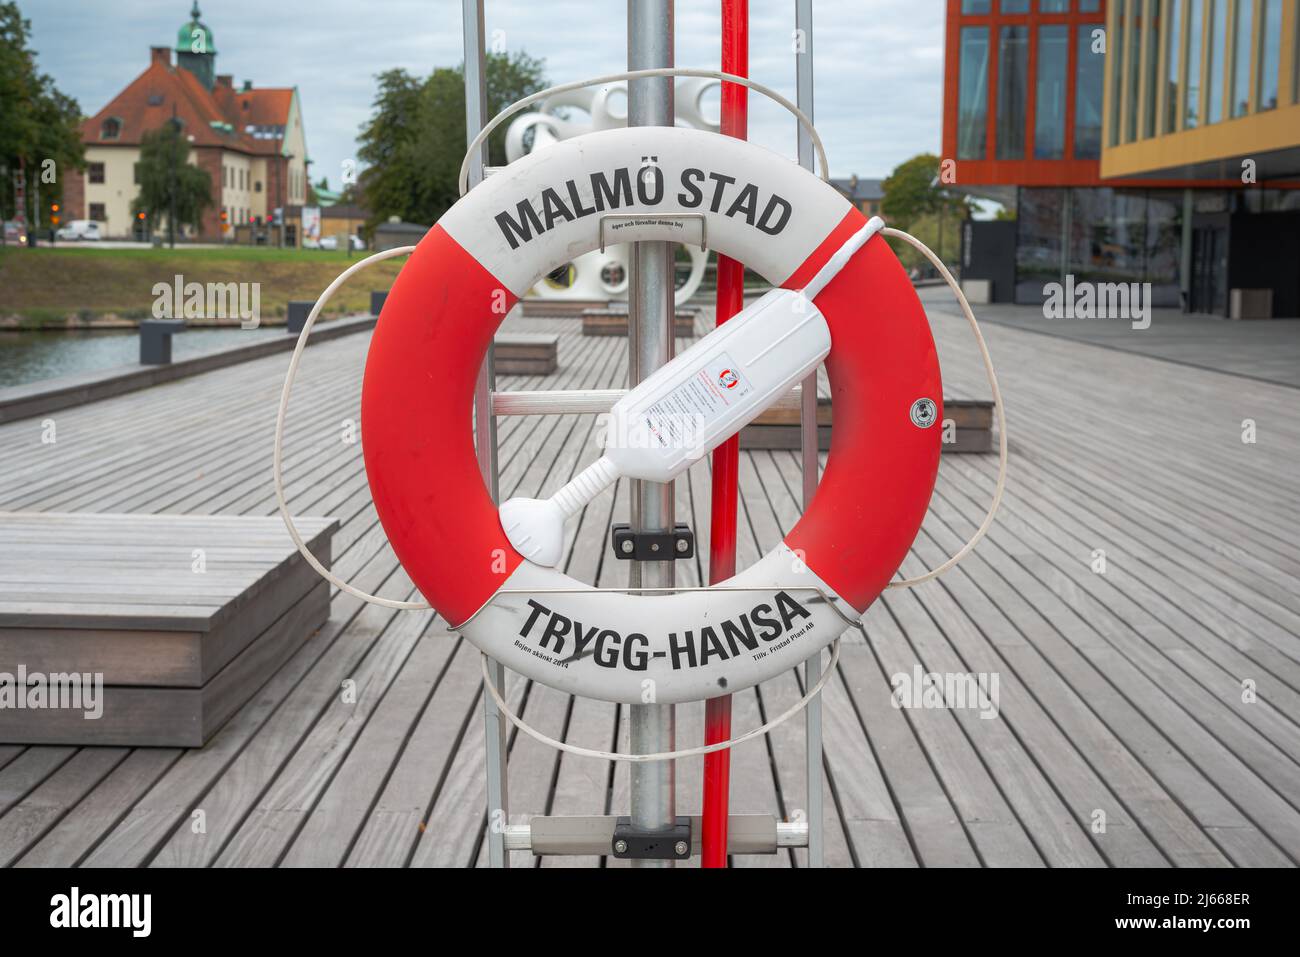 A Trygg-Hansa lifebelt at Gamla staden, Fiskehamnsgatan, Malmo stad. One red and white lifebuoy a symbol for the insurance Stock Photo